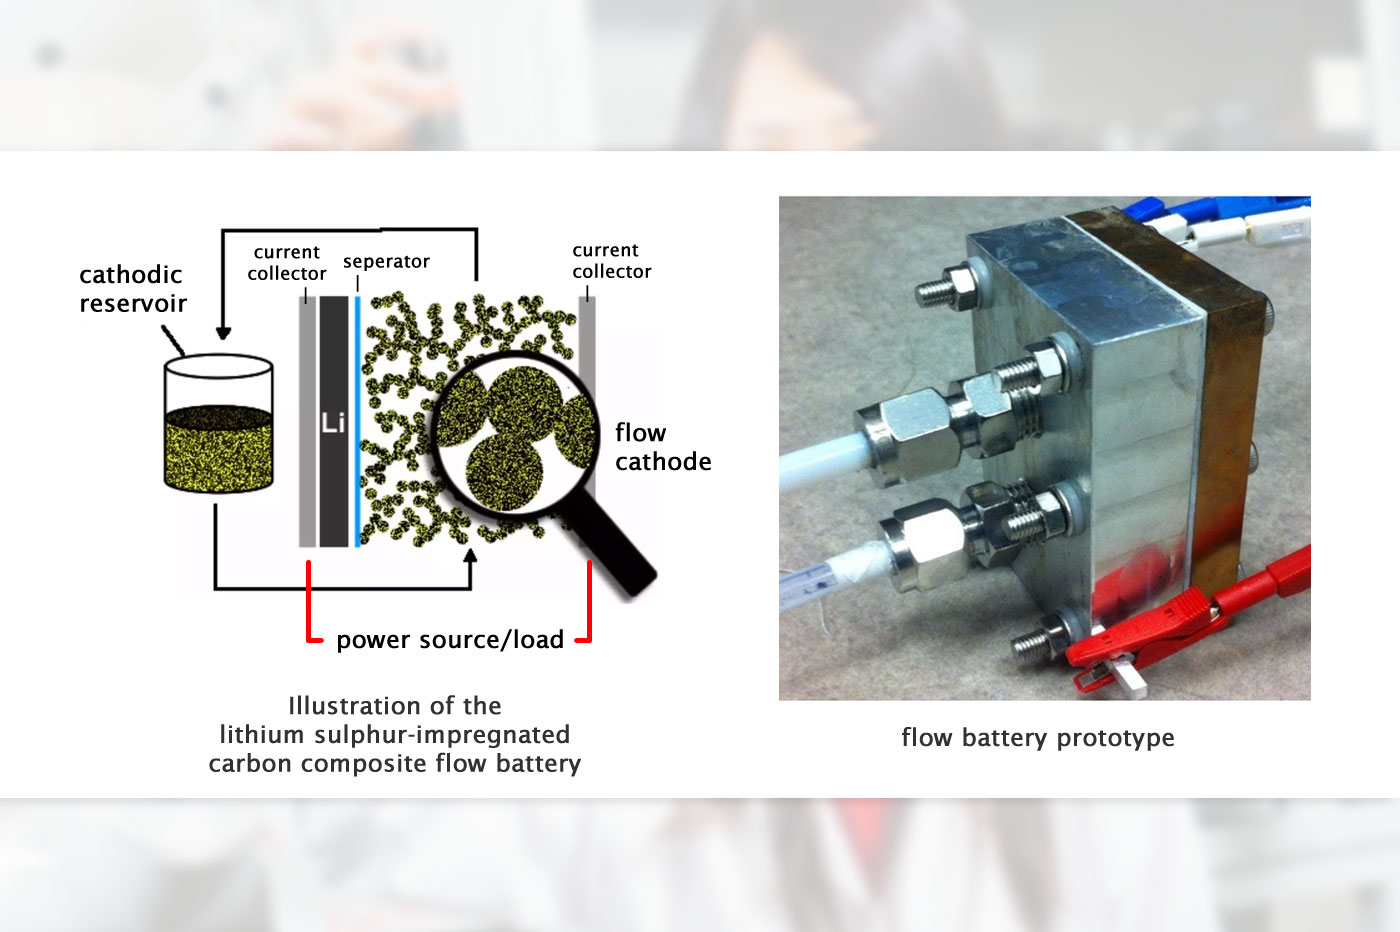 Professor Lu’s research group develops high-energy-density catholyte flow batteries